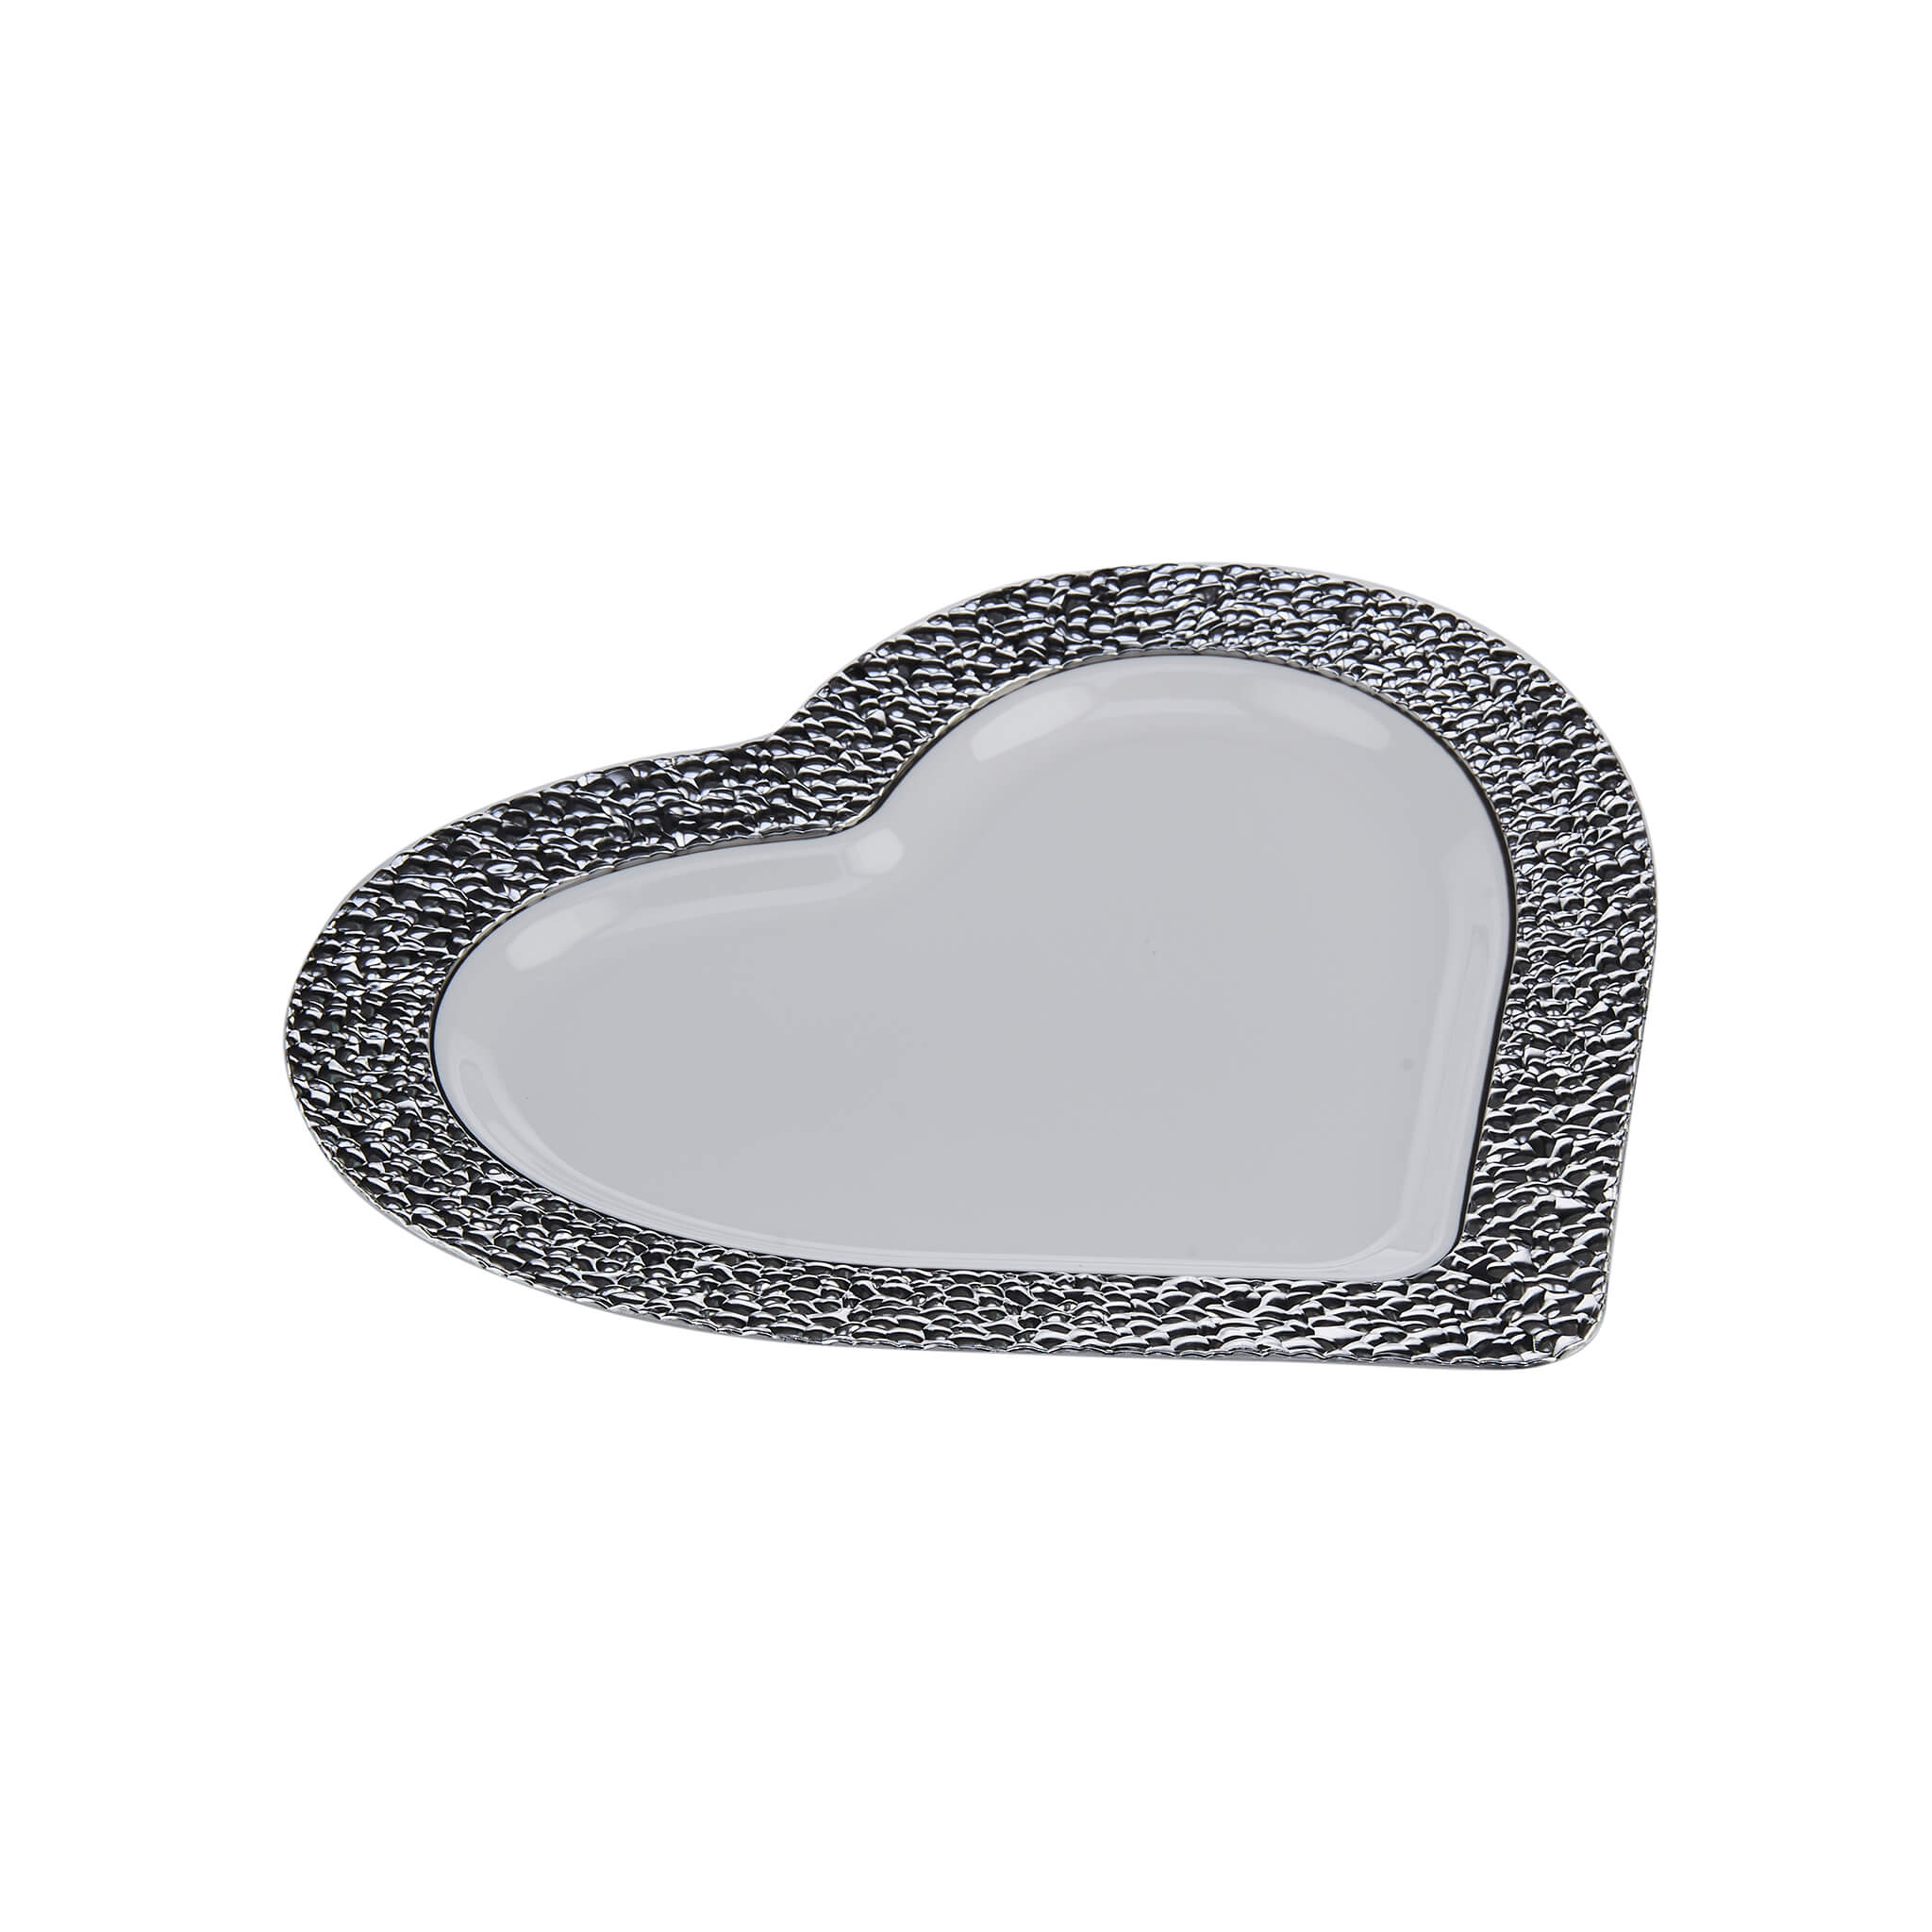 Premium Design Heart Plate with Silver Rim 10 Pieces